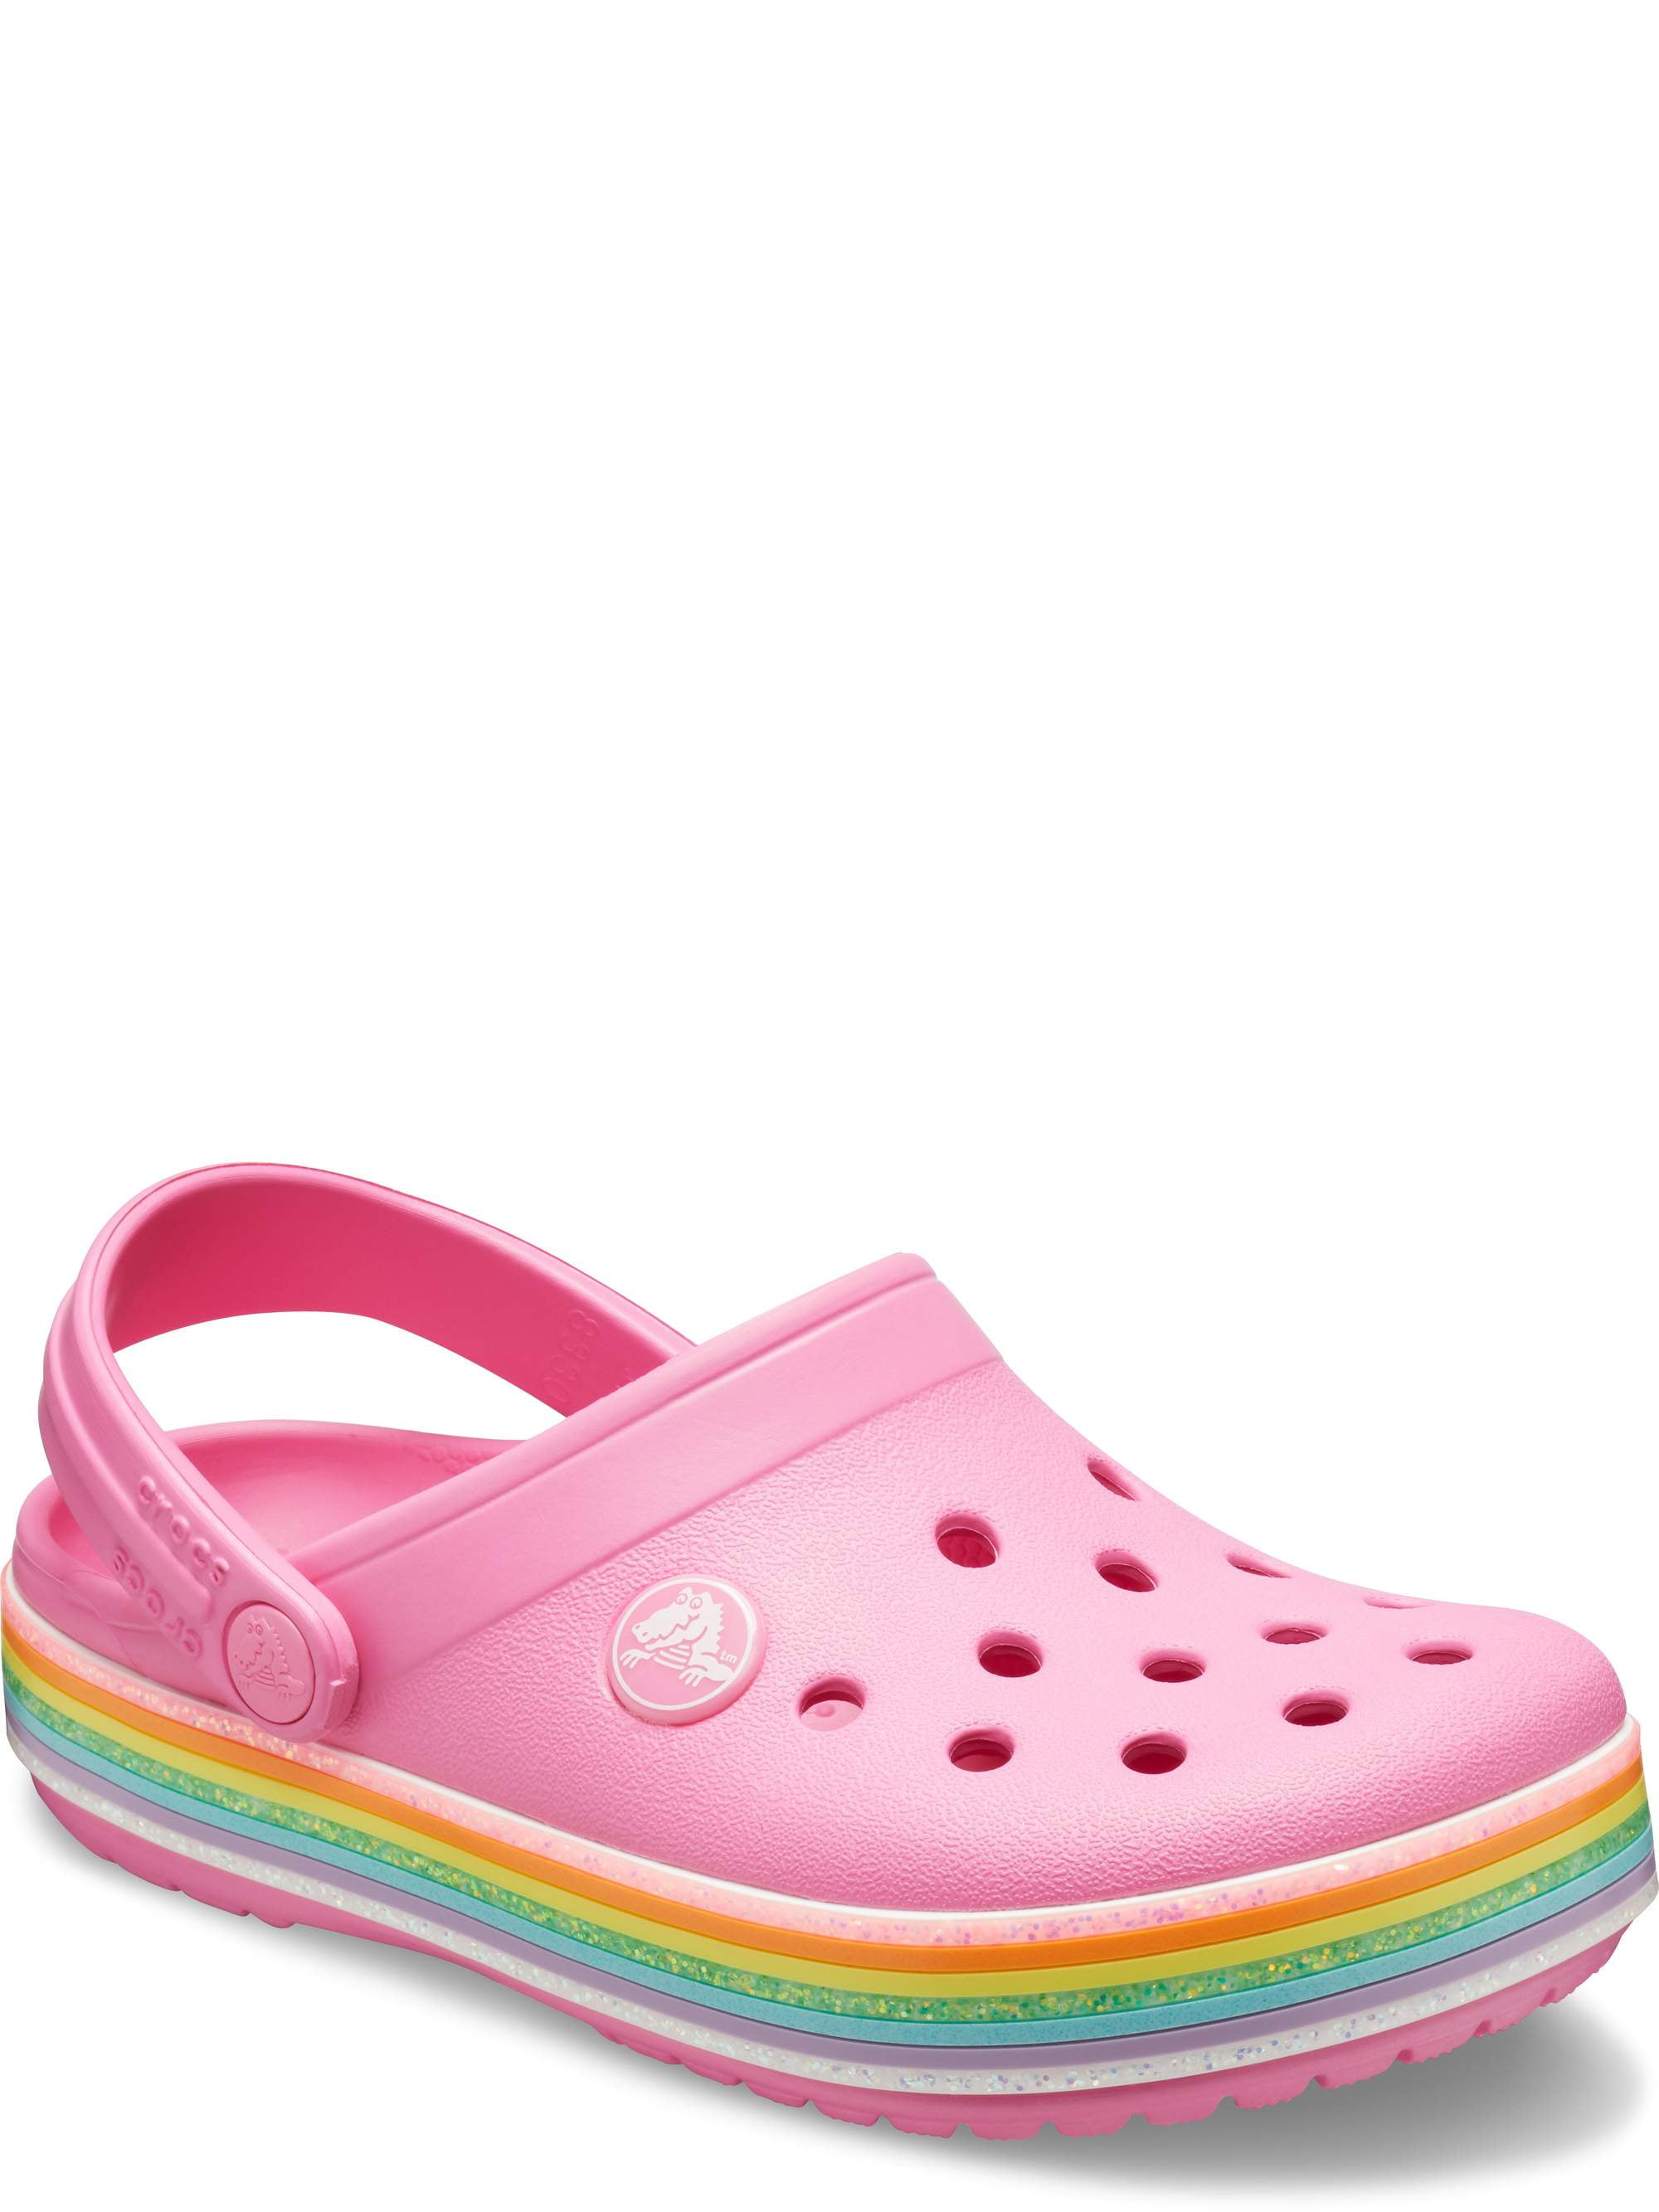 Crocs Child Crocband Rainbow Glitter 